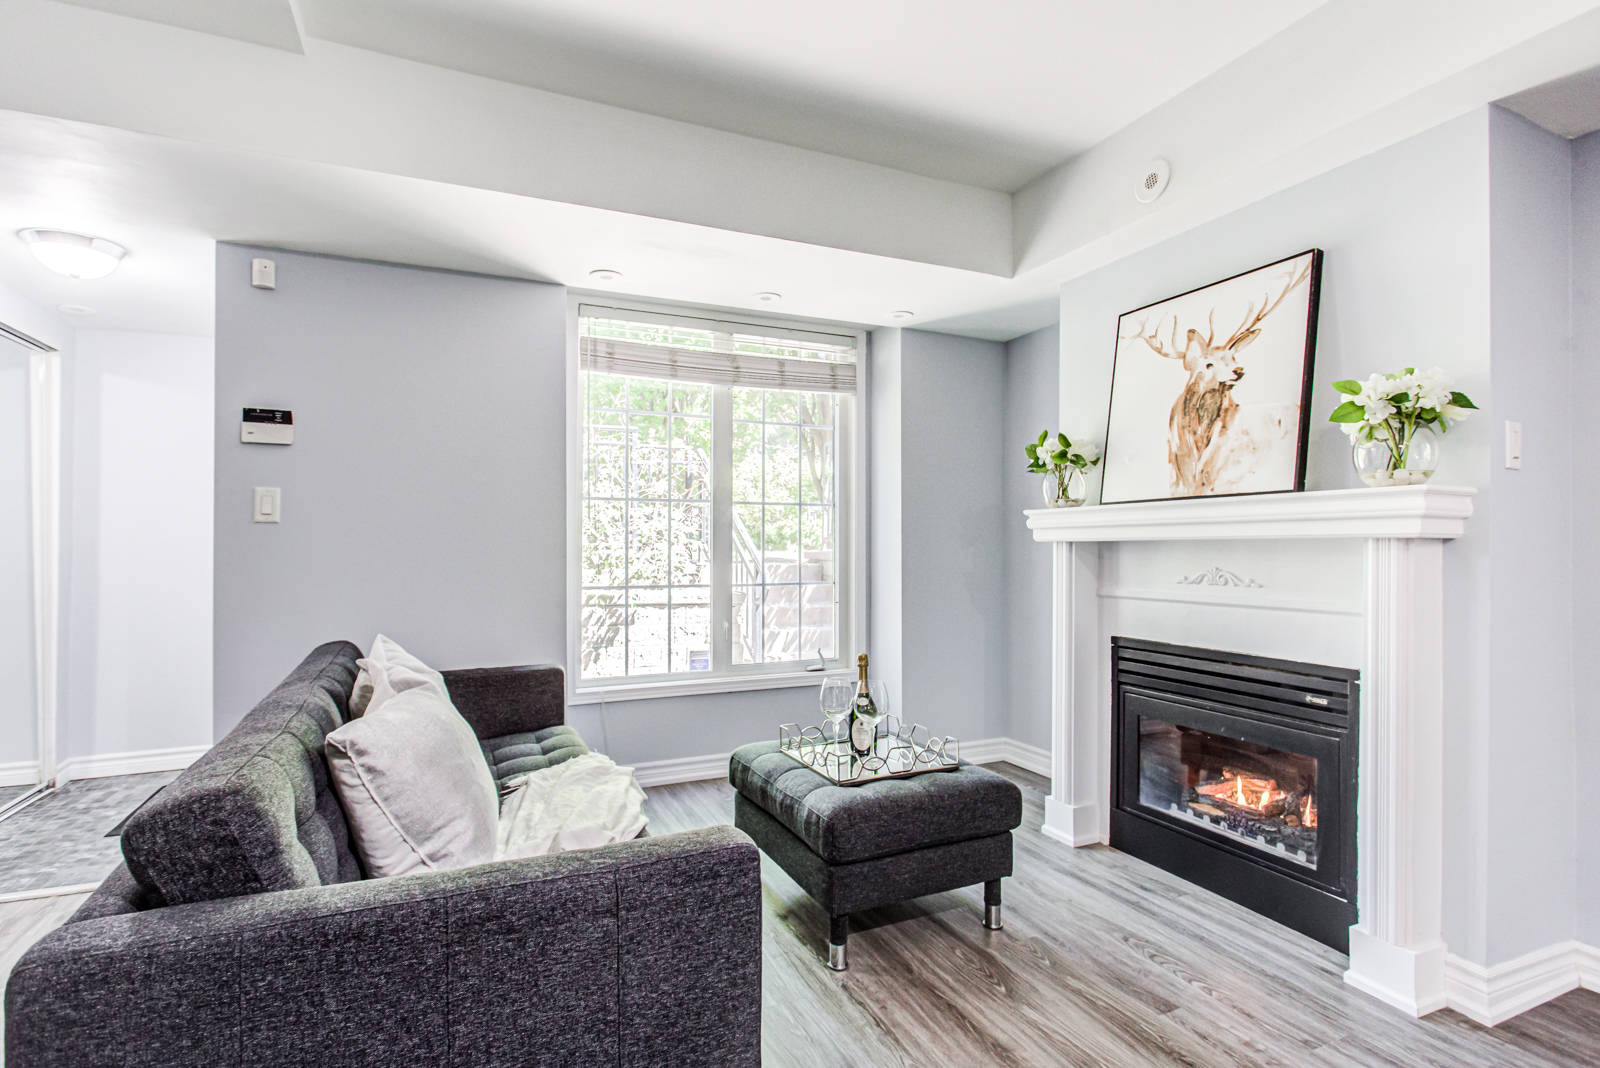 Living room with dark furniture, dark laminate floors and bright gray walls.